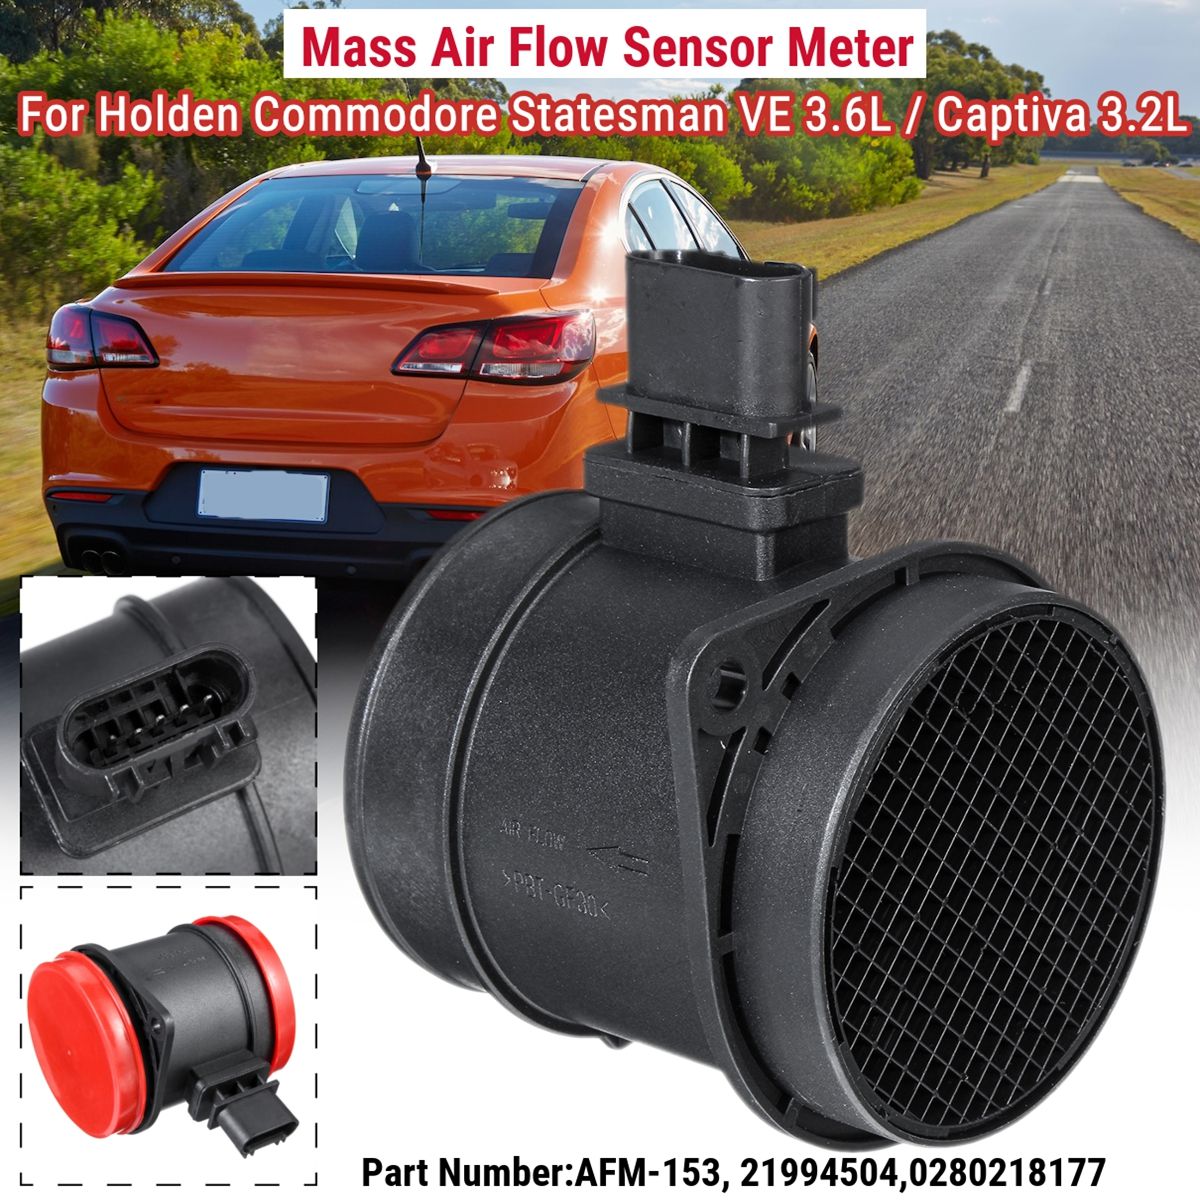 Mass-Air-Flow-Sensor-Meter-MAF-For-Holden-Commodore-Statesman-VE-Captiva-32L-1678799